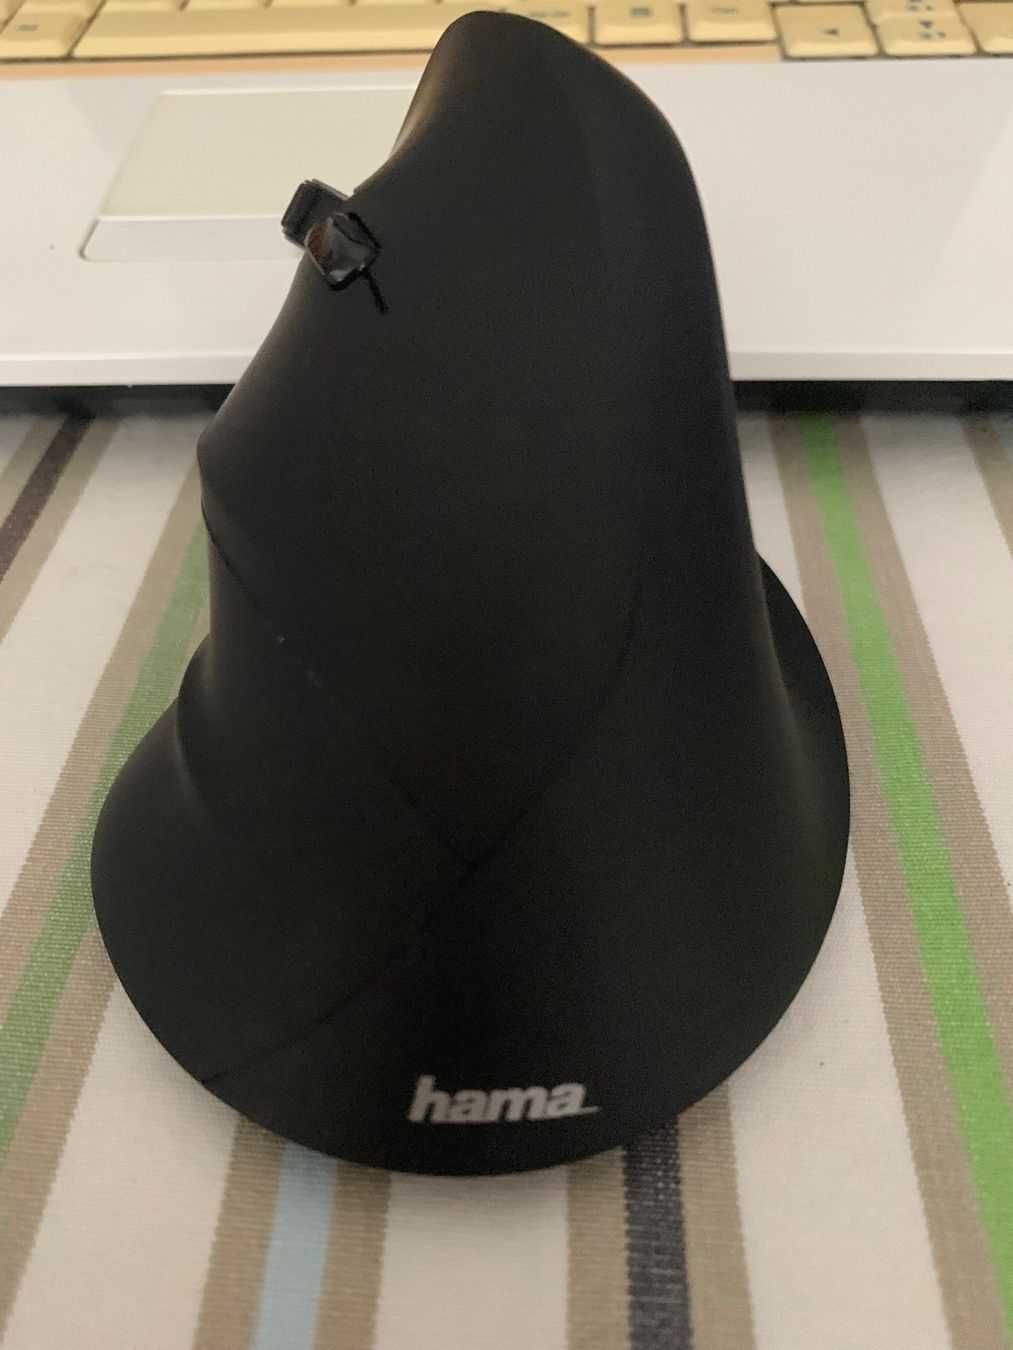 Hama Emw-500L left Wireless Ergonomic Mouse